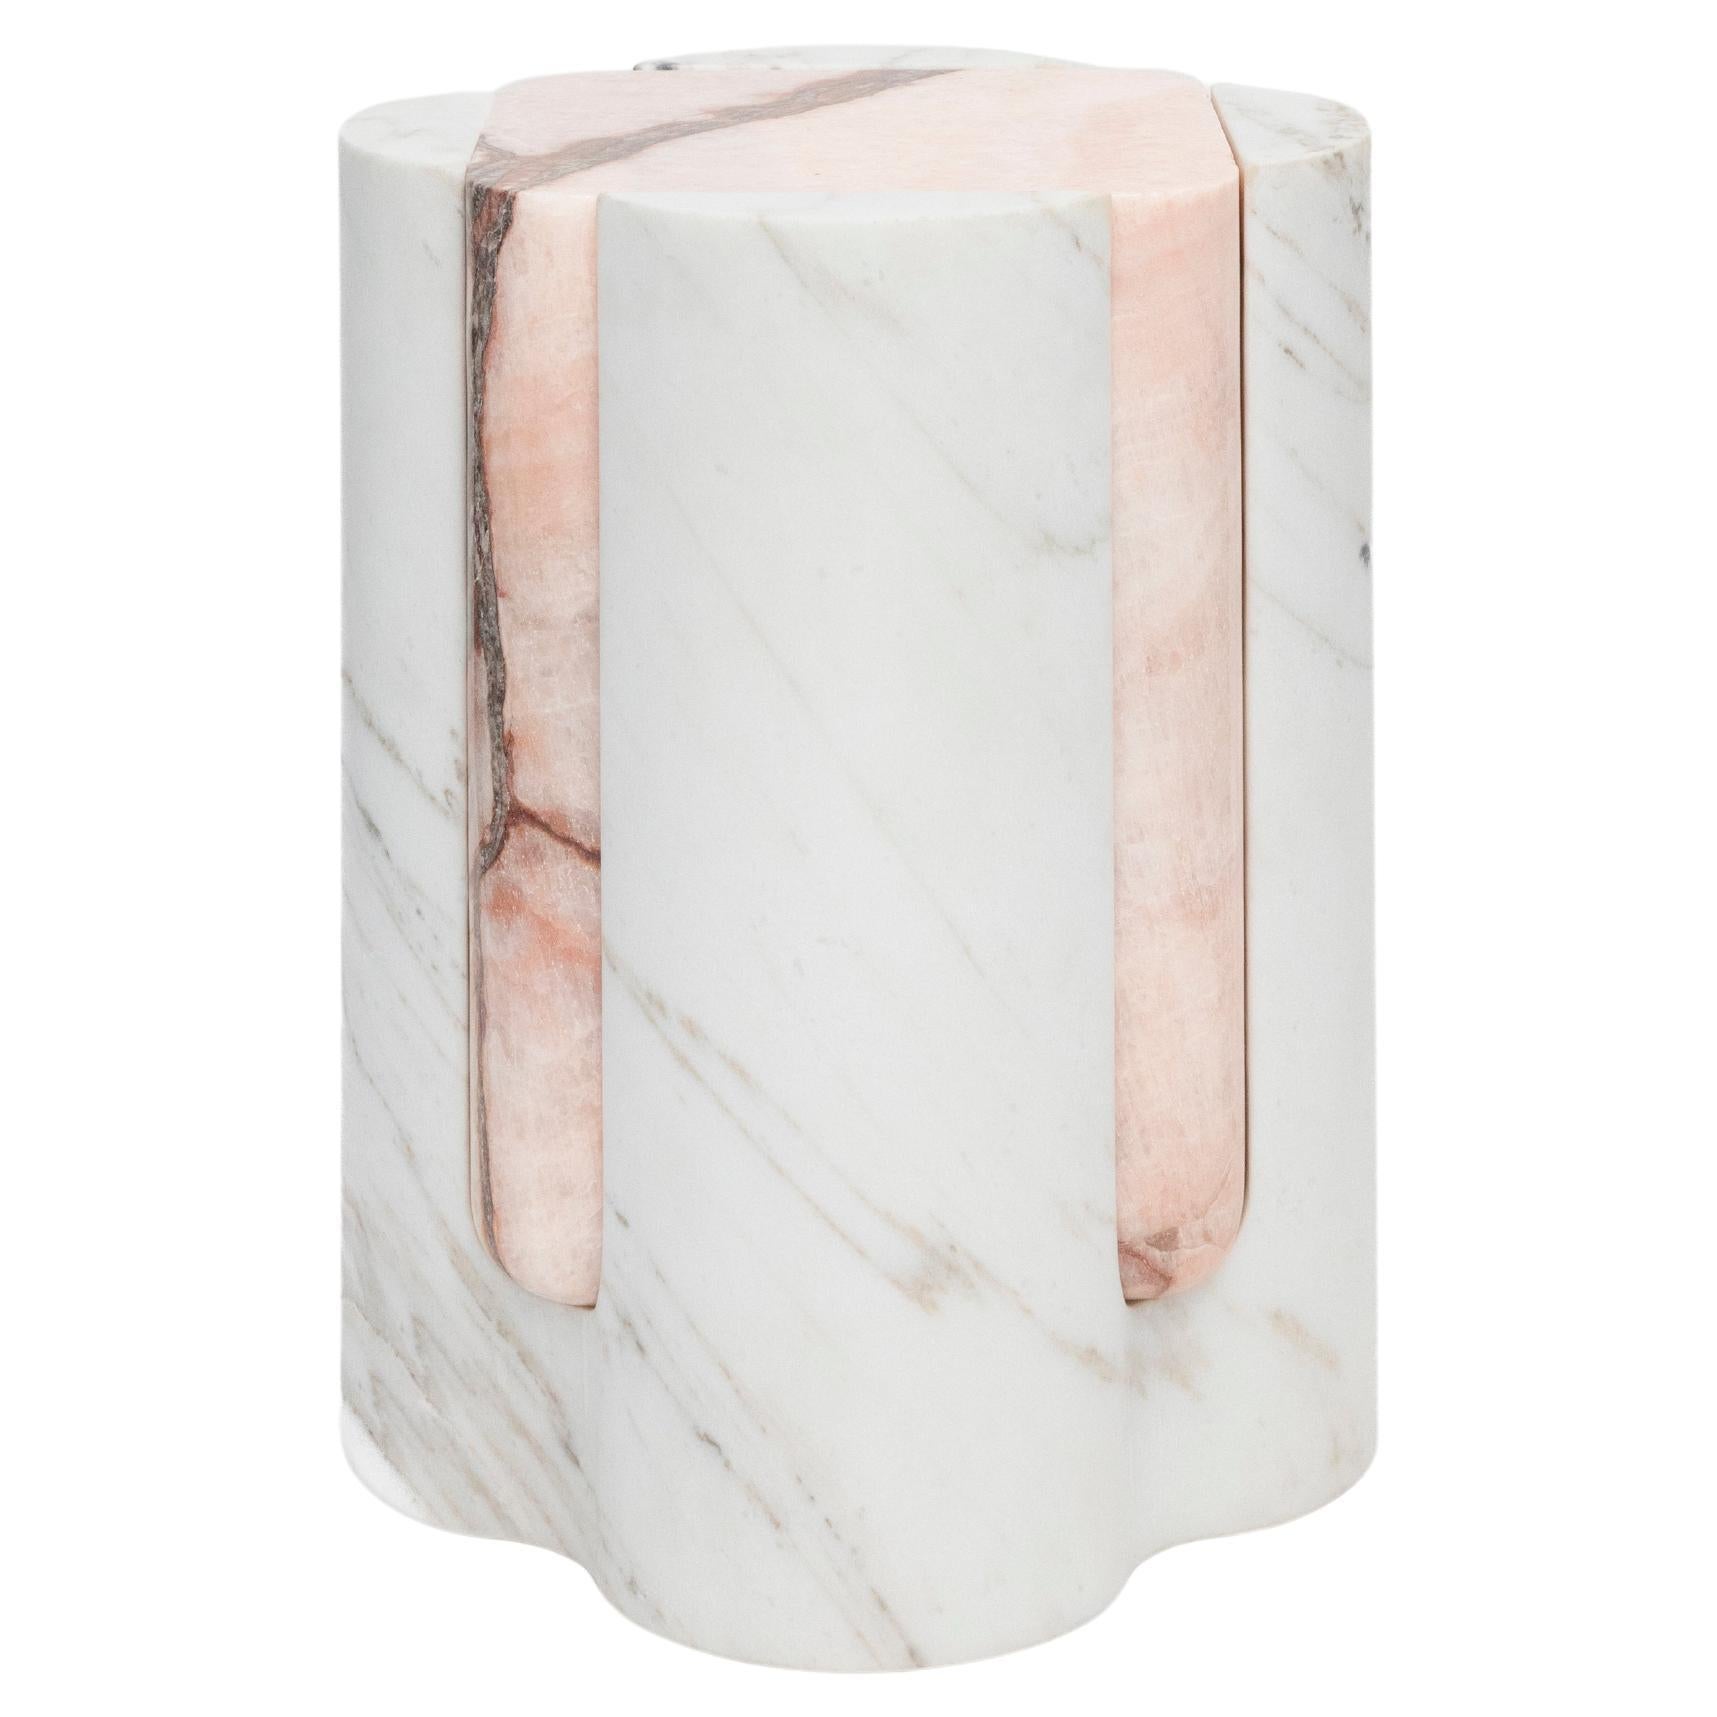 Volcanic Shades of marble II - Sten Studio - Golden calacatta and pink onyx